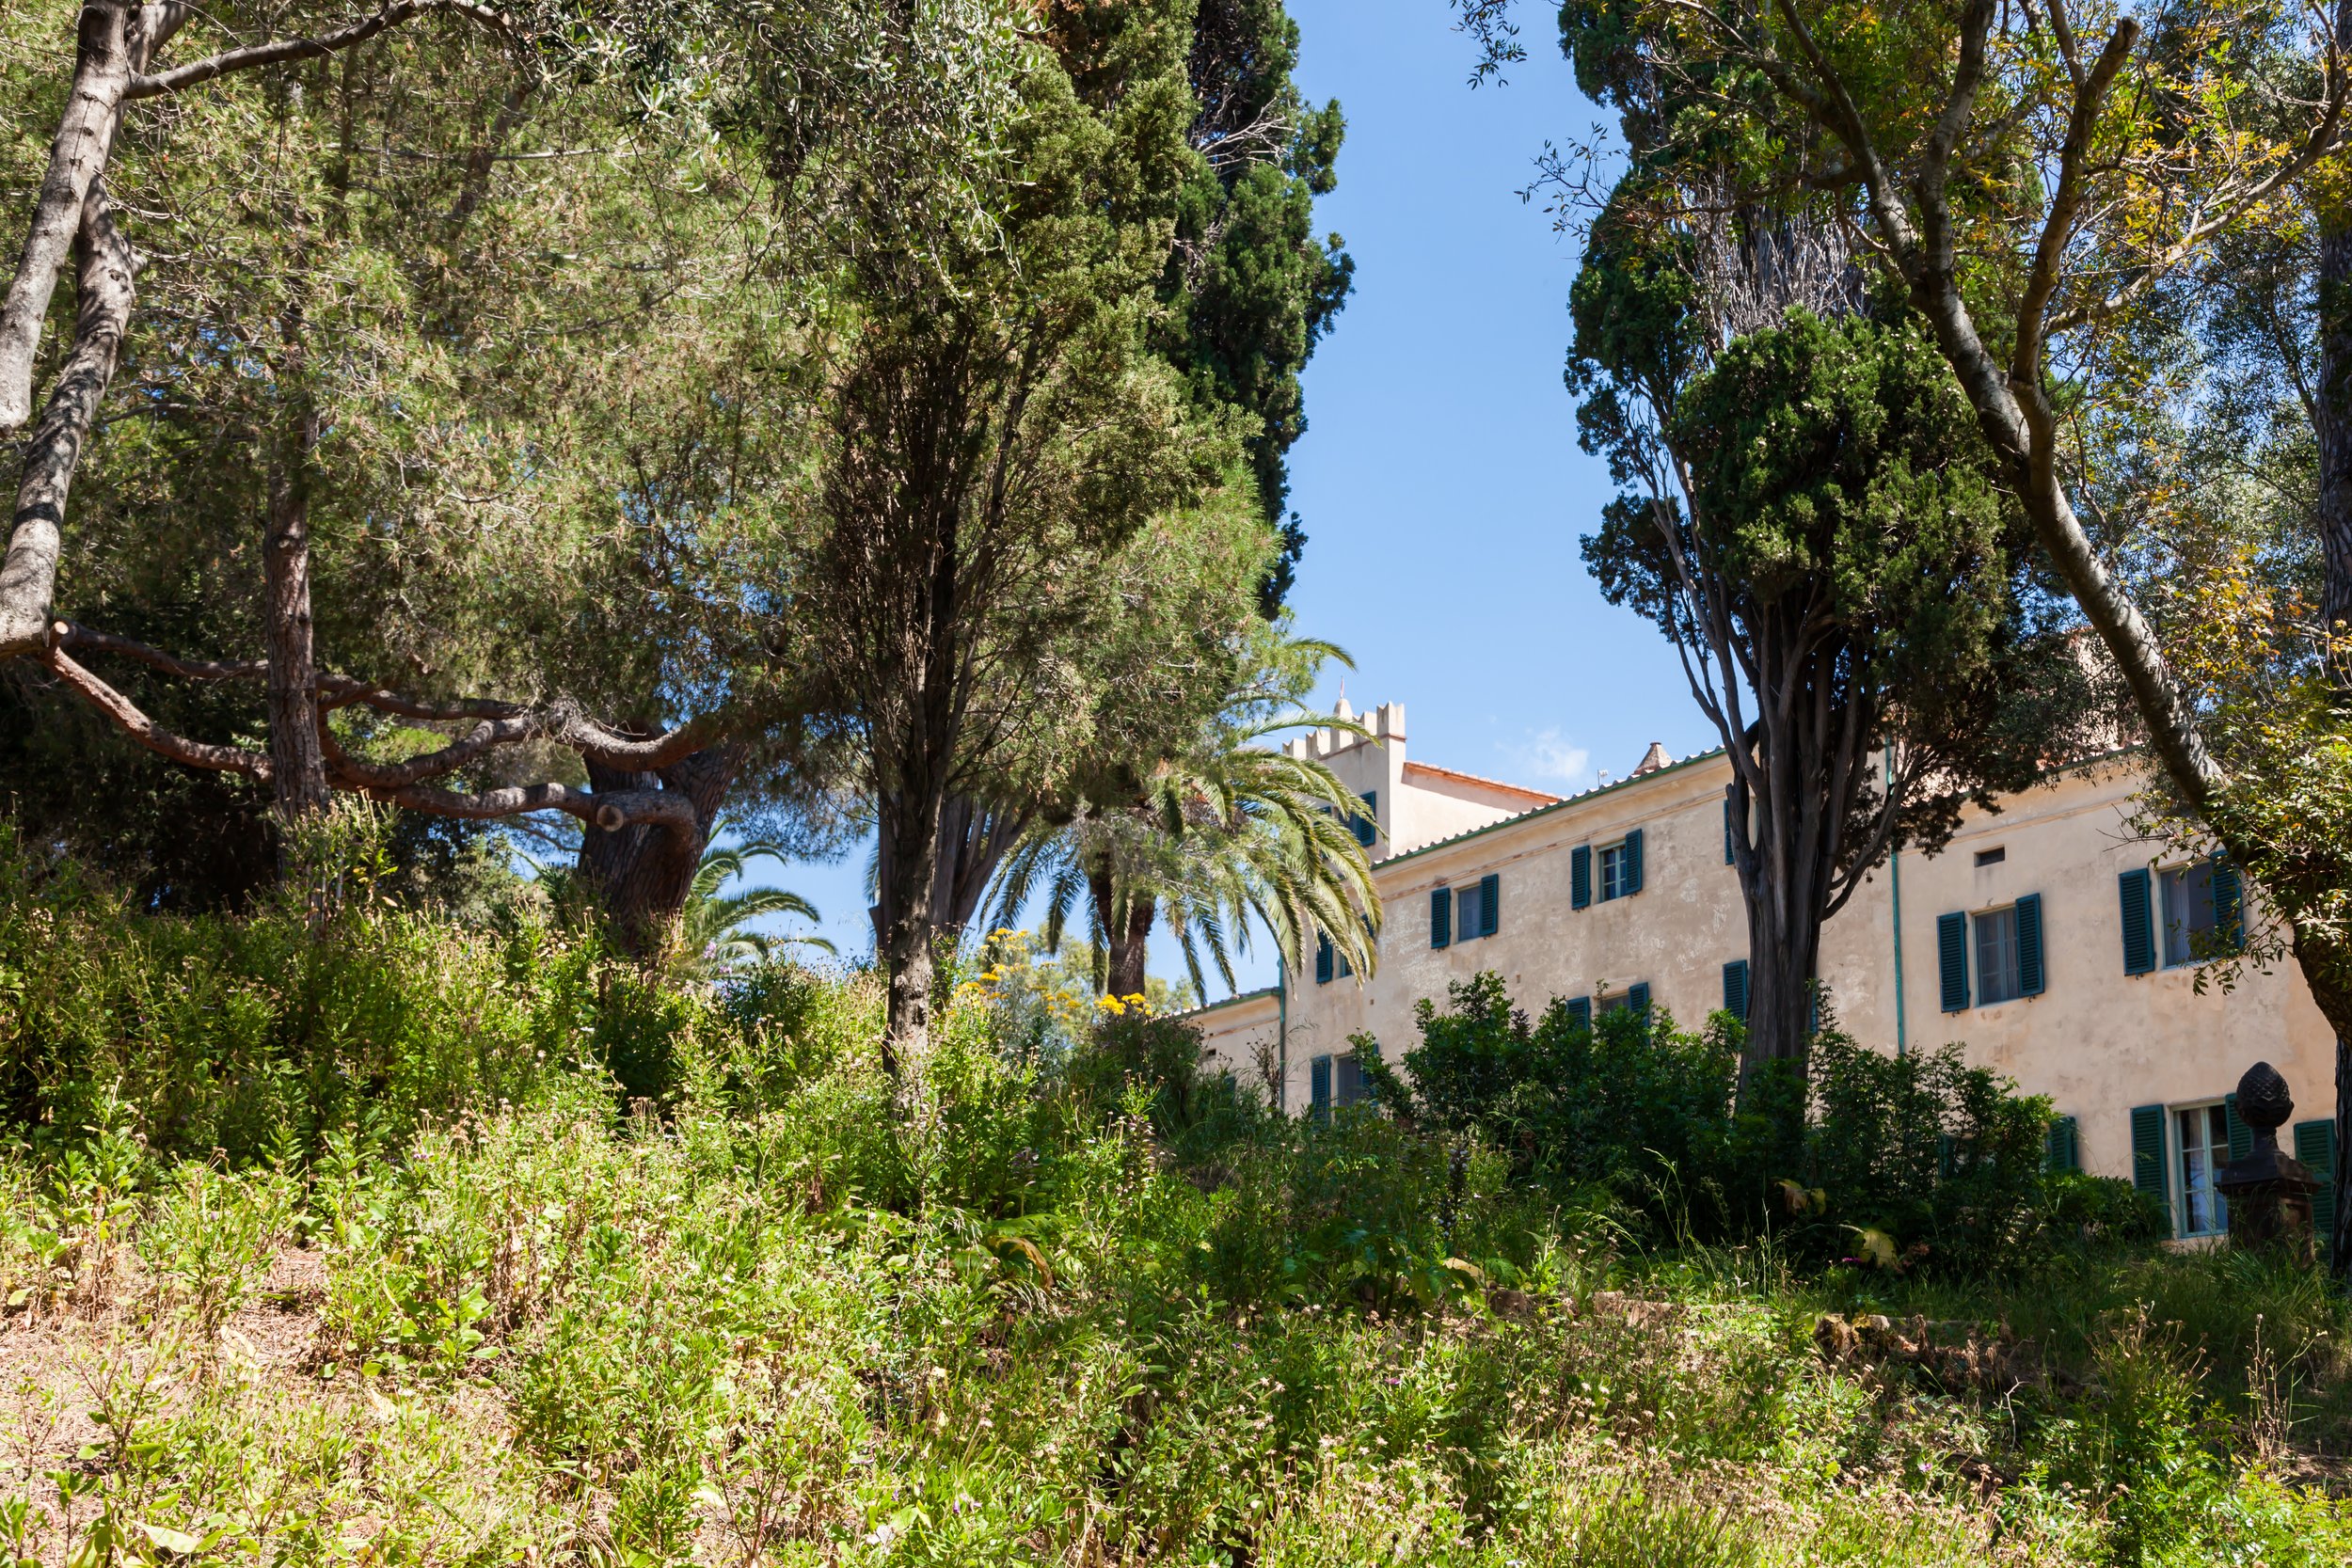 Francis York Luxury Villa Rental on the Tuscan Coast 5.jpg